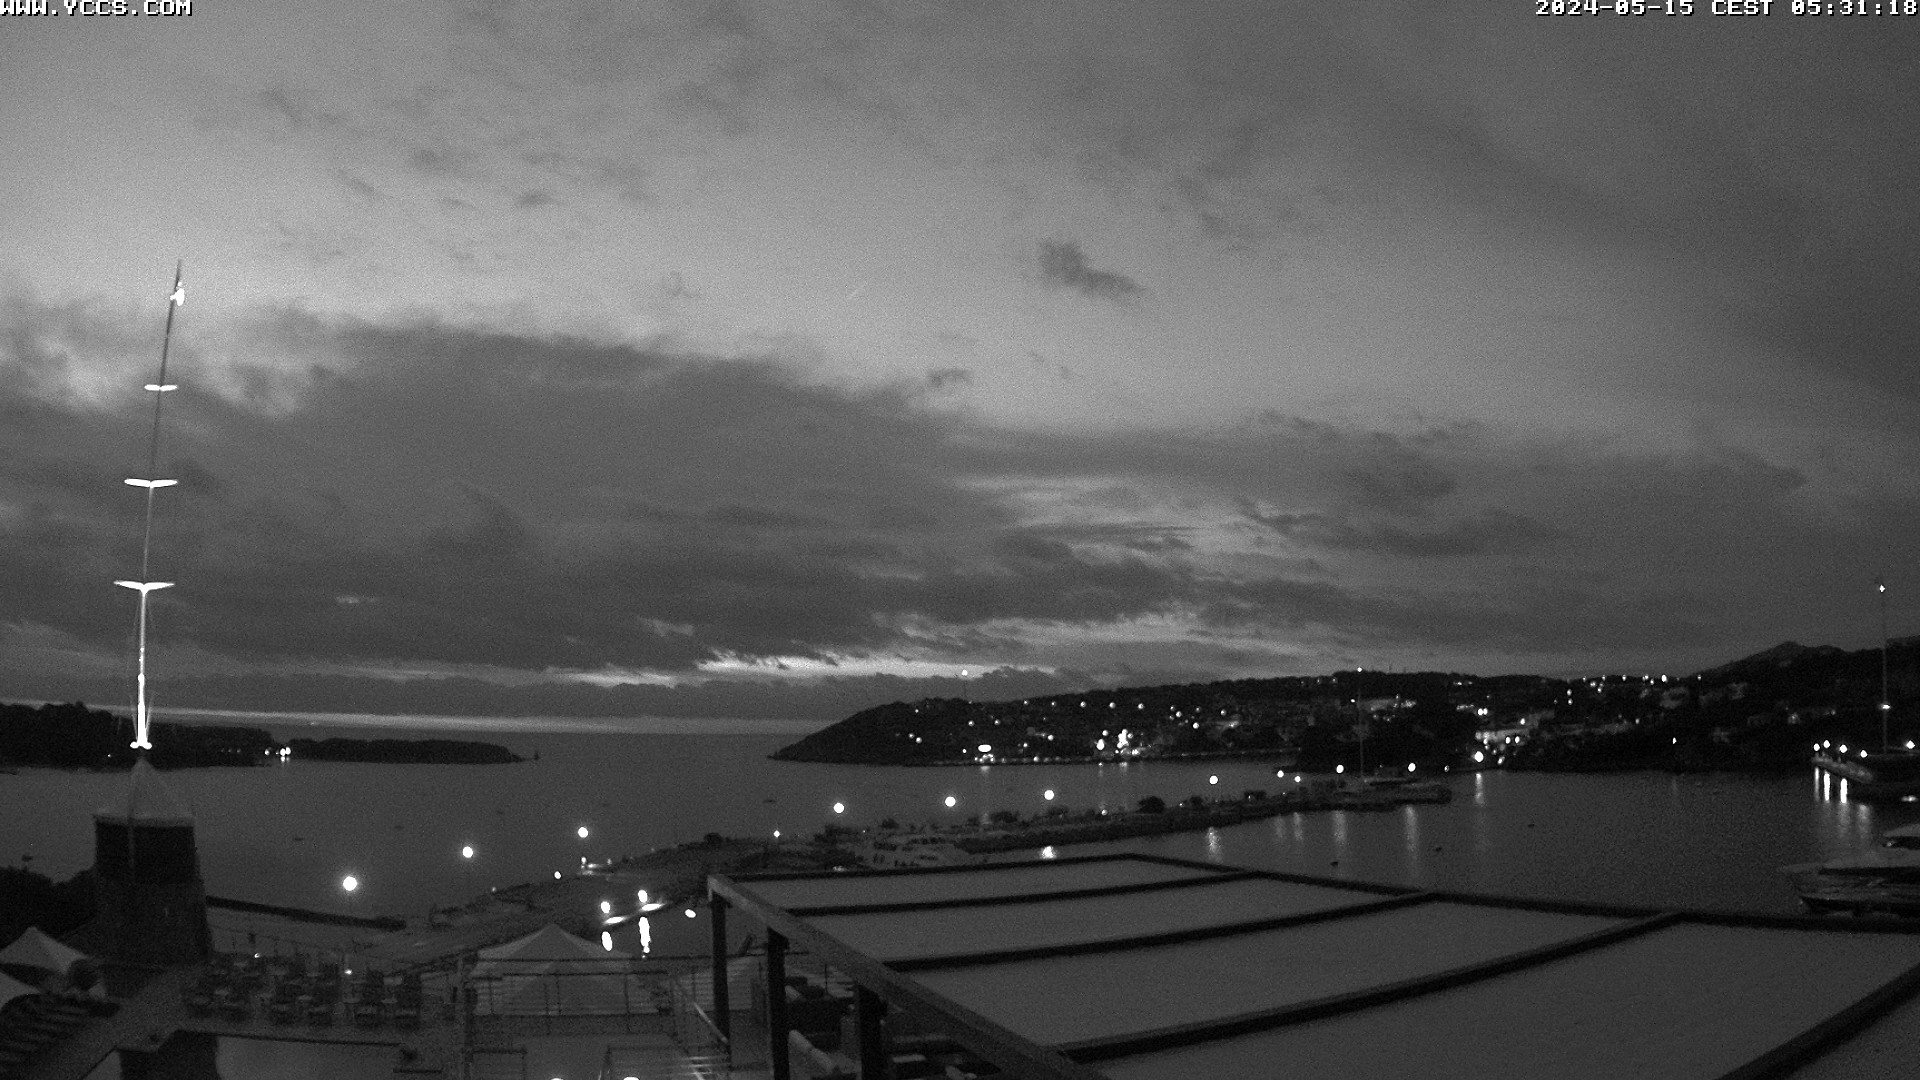 Porto Cervo Mar. 05:31